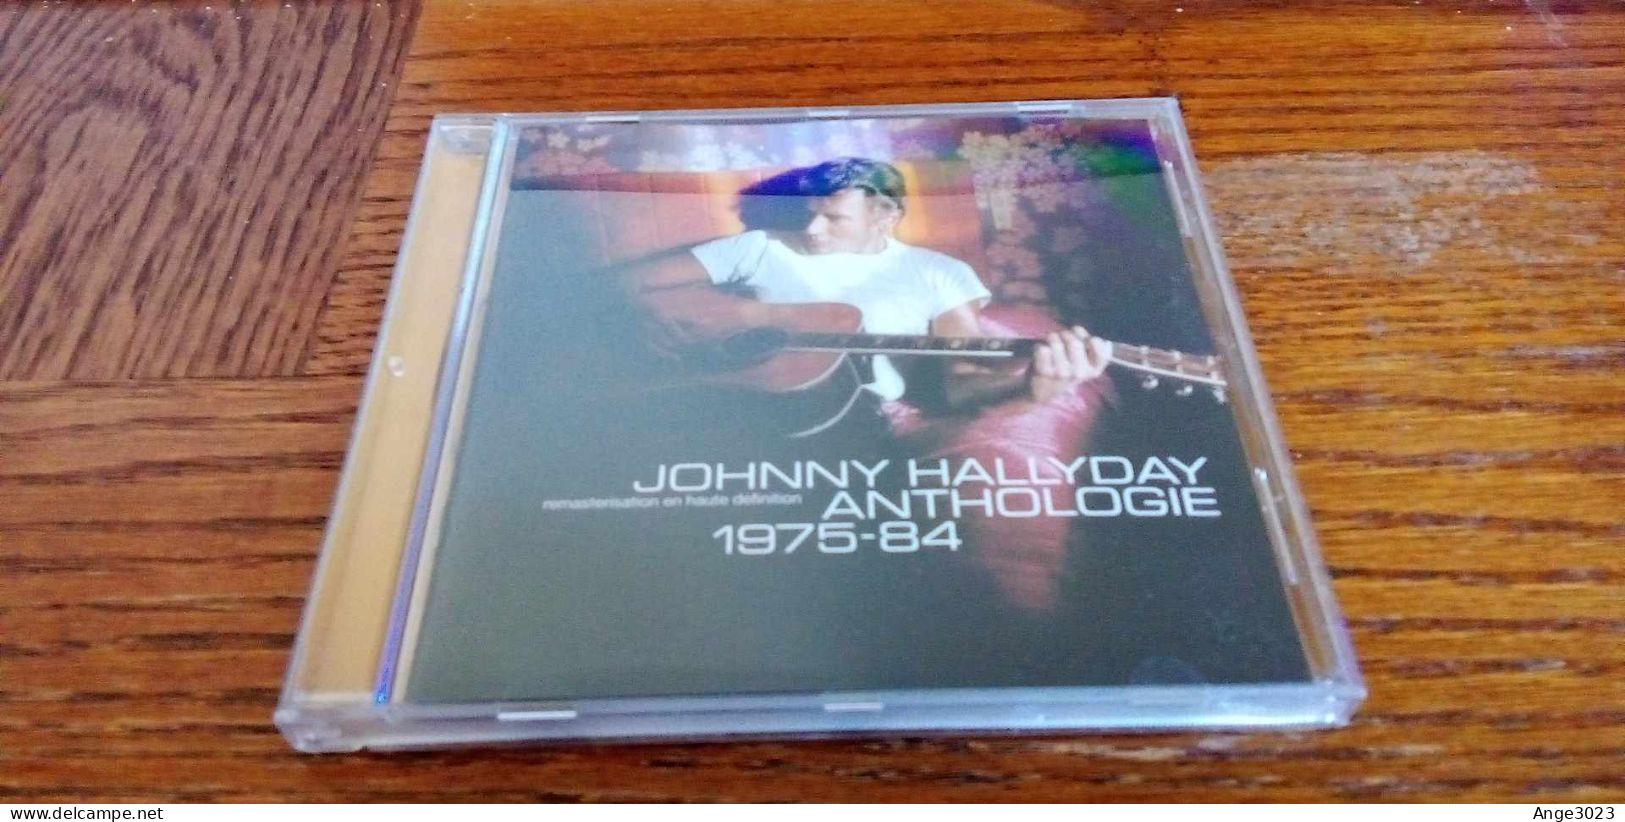 JOHNNY HALLYDAY "Anthologie 1975-84" - Other - French Music